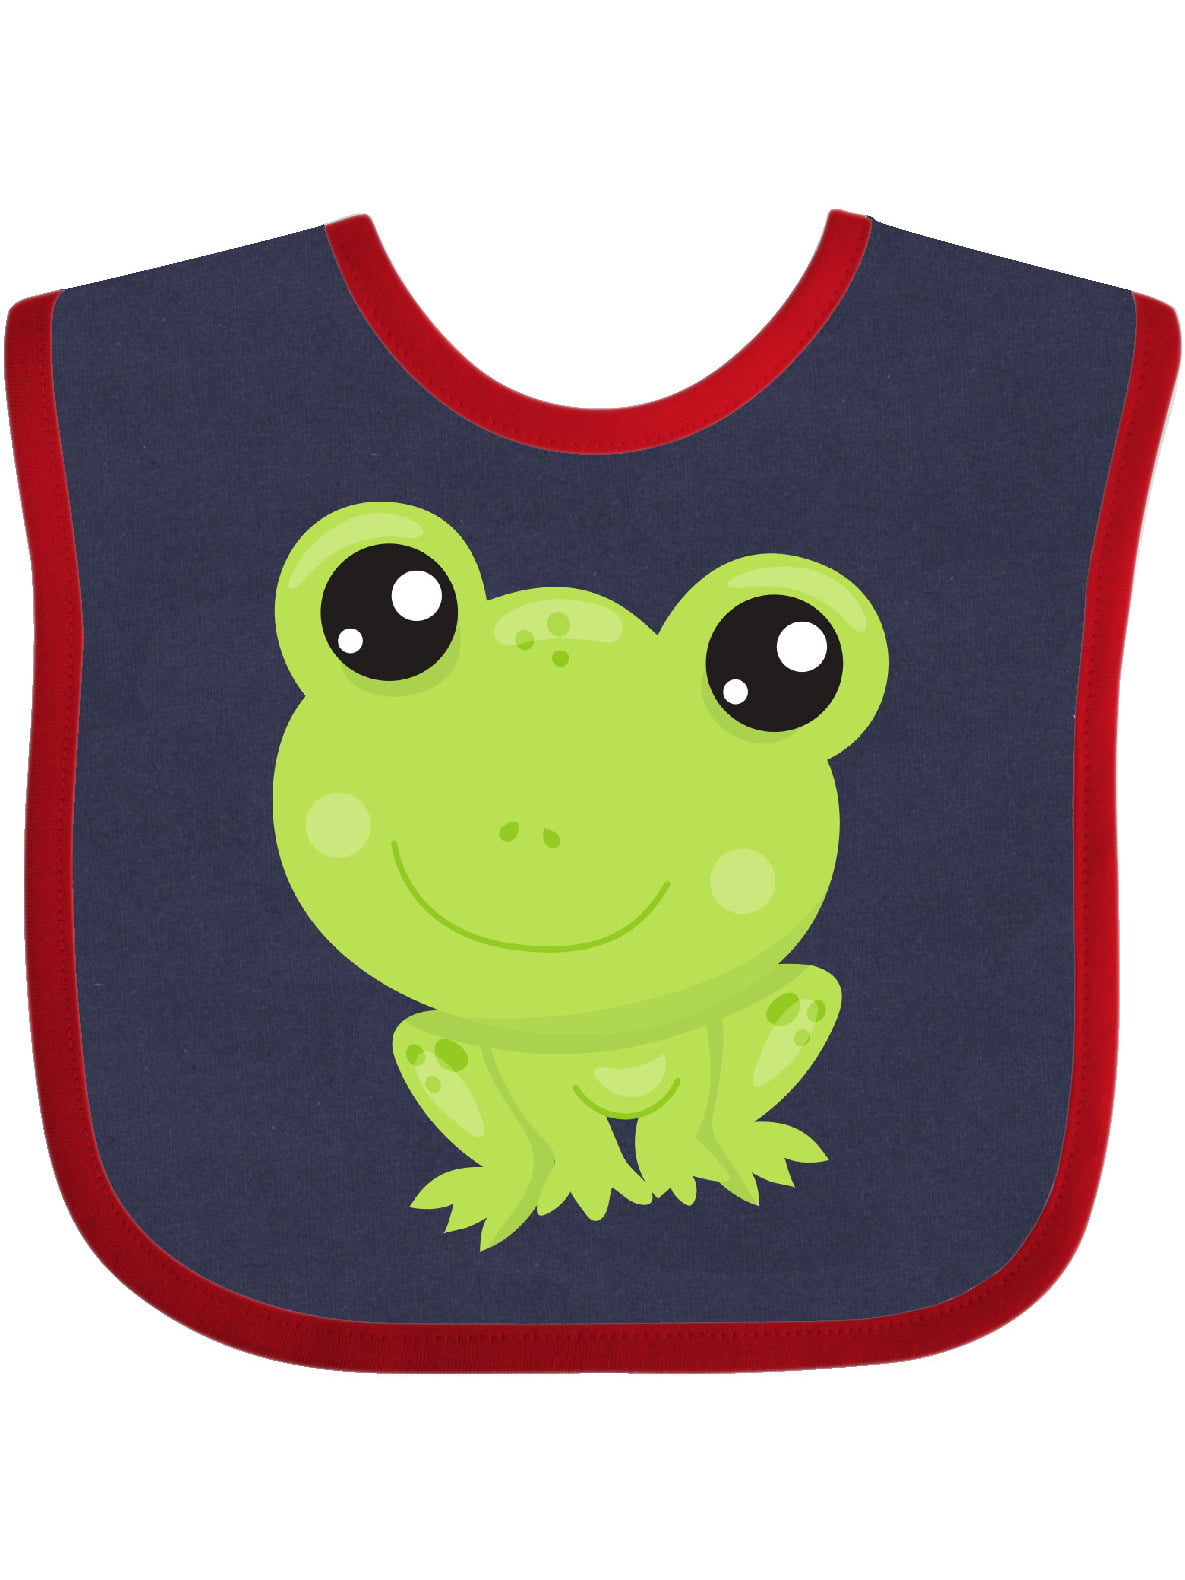 Baby/Toddler Dribble Bib Bundle Apple/Frog Red/White/Green 6 PACK! 